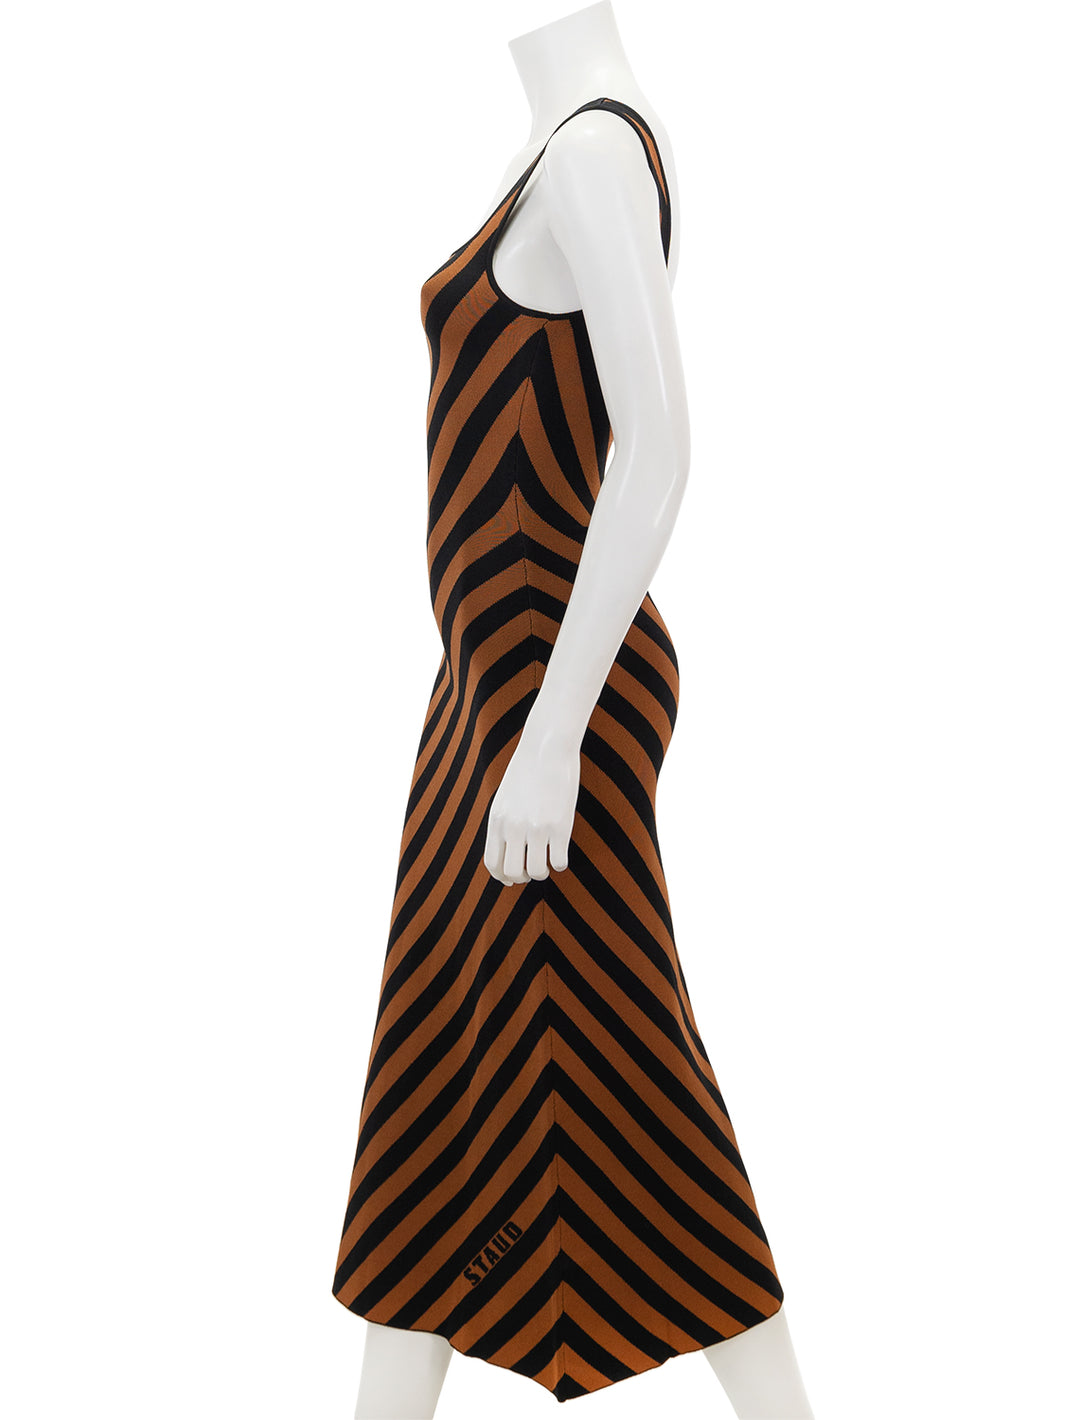 Side view of STAUD's Kate Dress in Black and Tan Seashore Stripe.